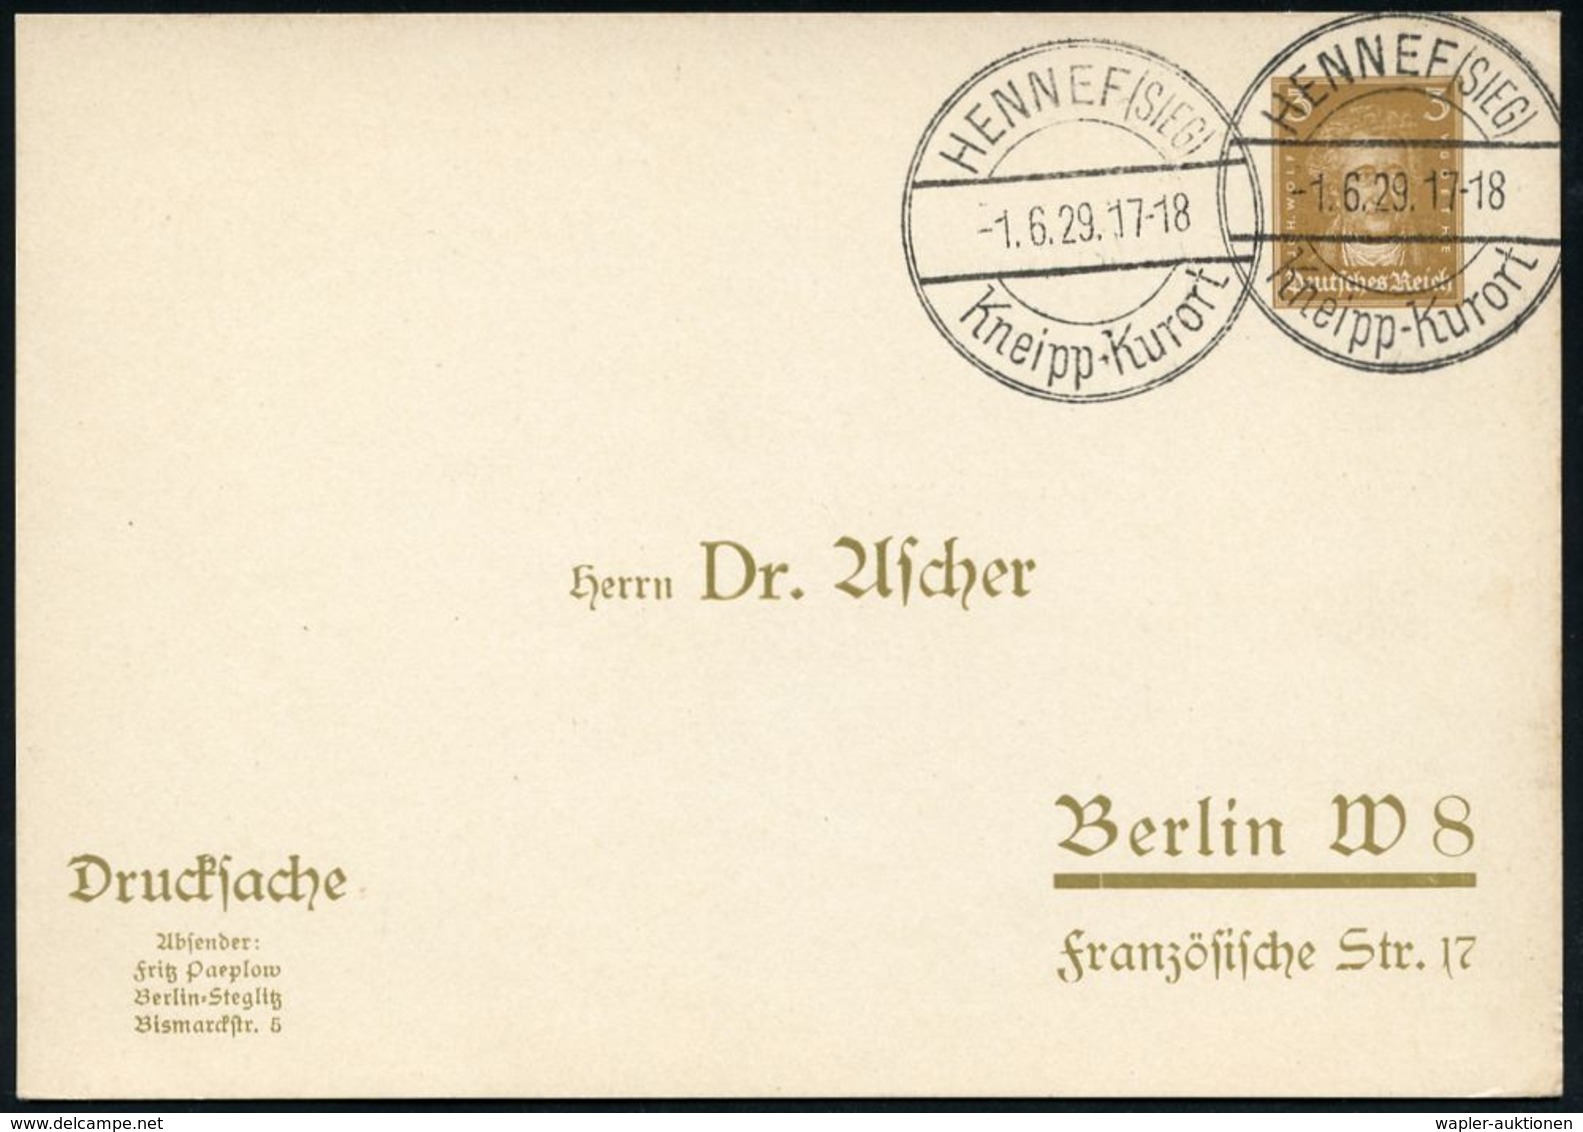 SEBASTIAN KNEIPP / KNEIPP-KURORTE : HENNEF (SIEG)/ Kneipp-Kurort 1929 (1.6.) HWSt Klar Auf PP 3 Pf. Goethe (Paeplow-Asch - Medizin